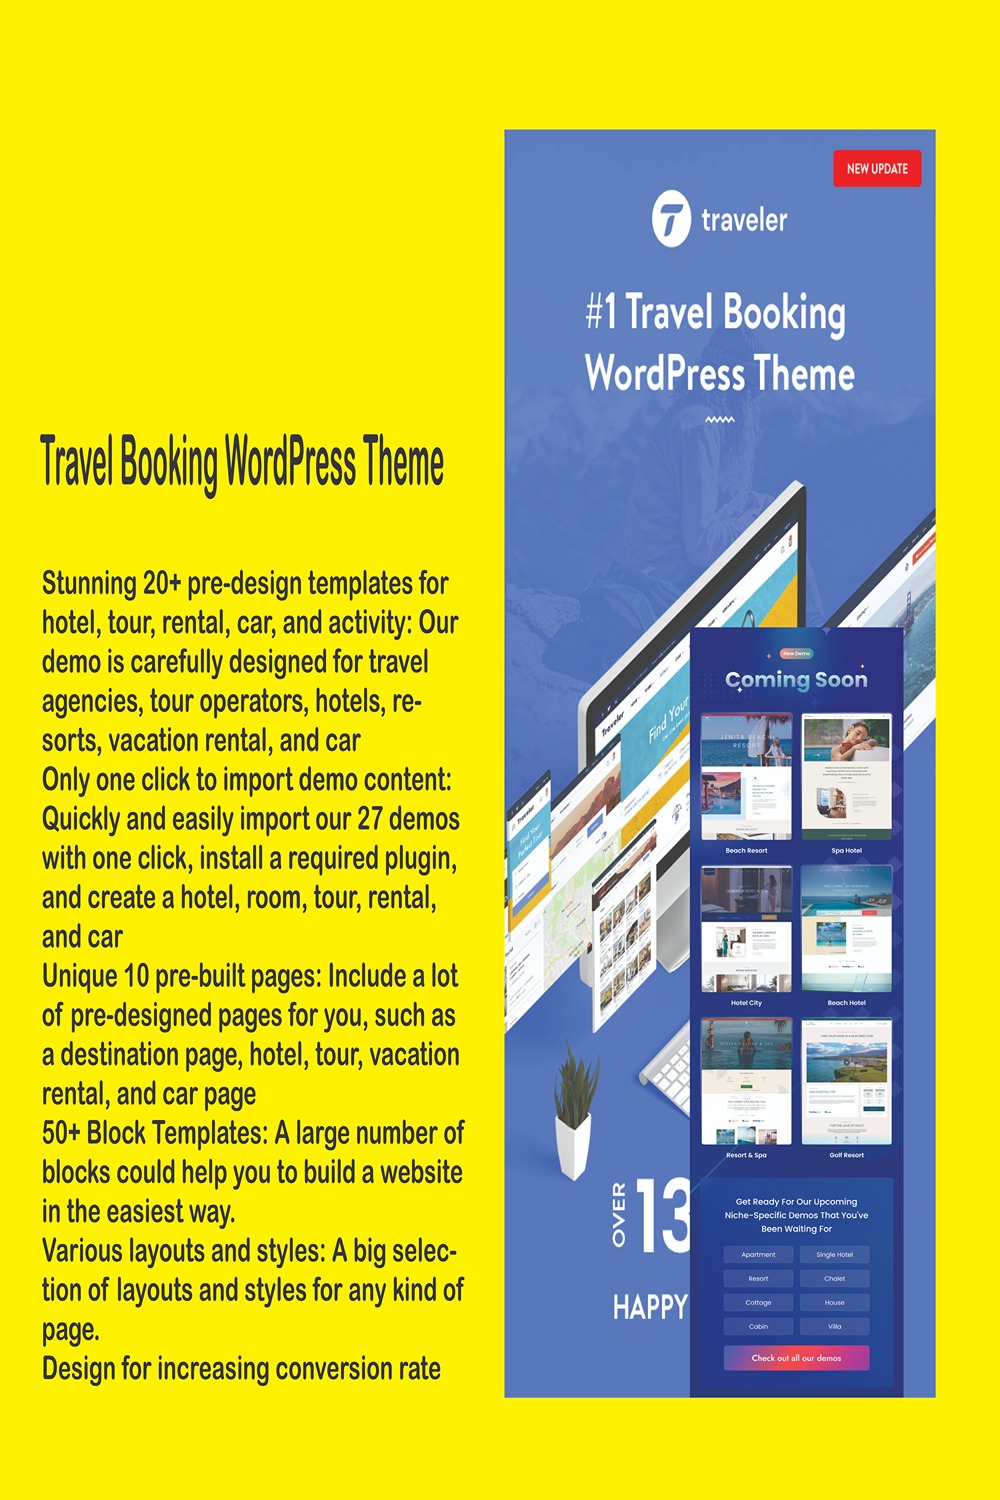 Travel Booking - WordPress Theme pinterest preview image.